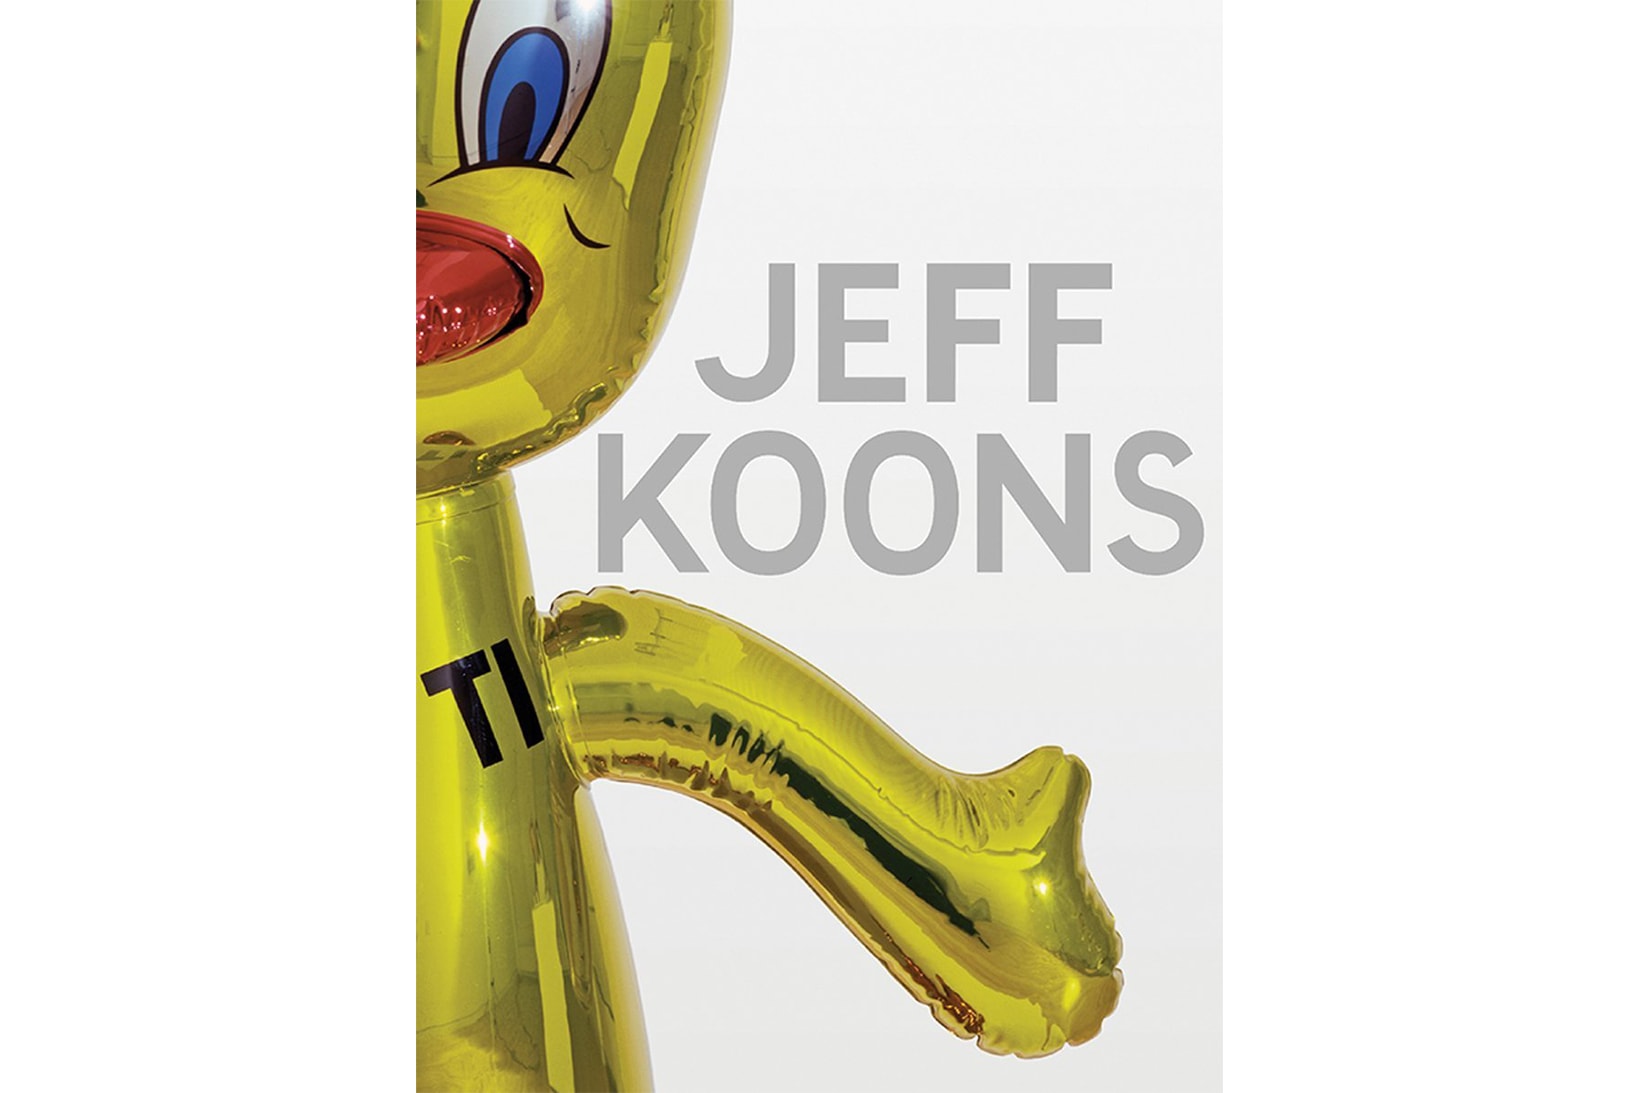 Jeff Koons Now Book Damien Hirst Other Criteria Newport Street Gallery